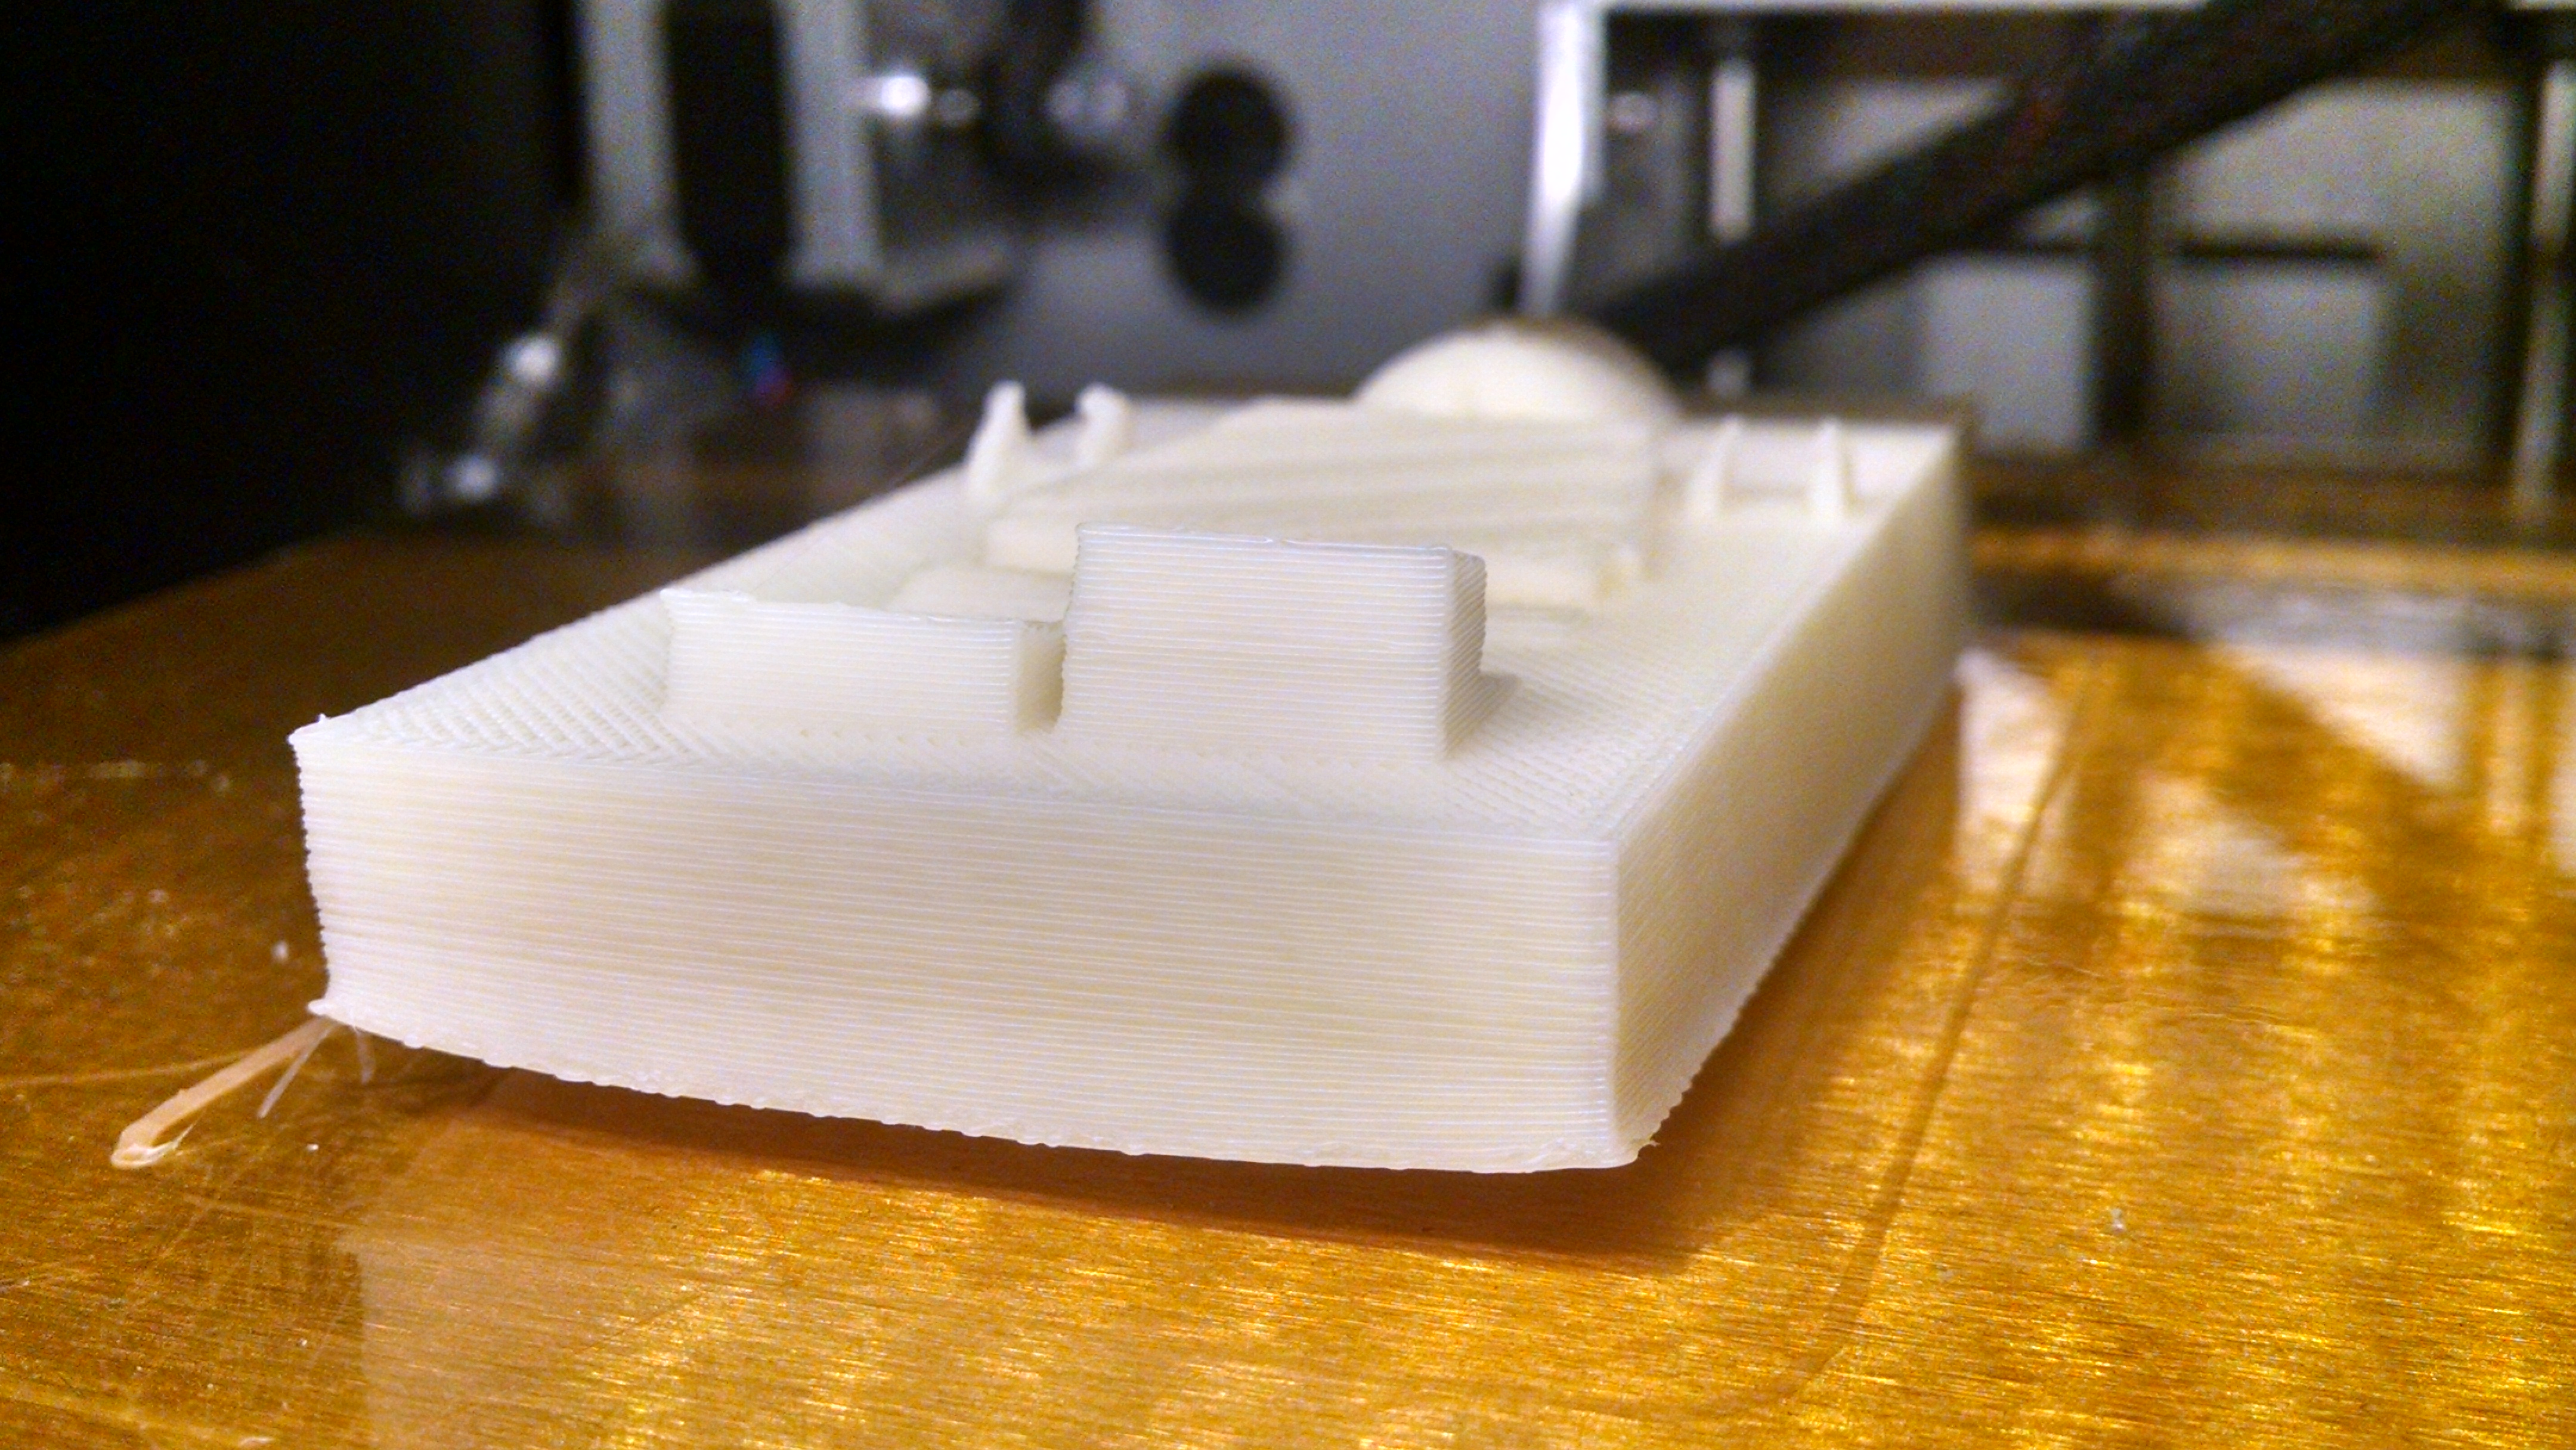 My first successful 3D print